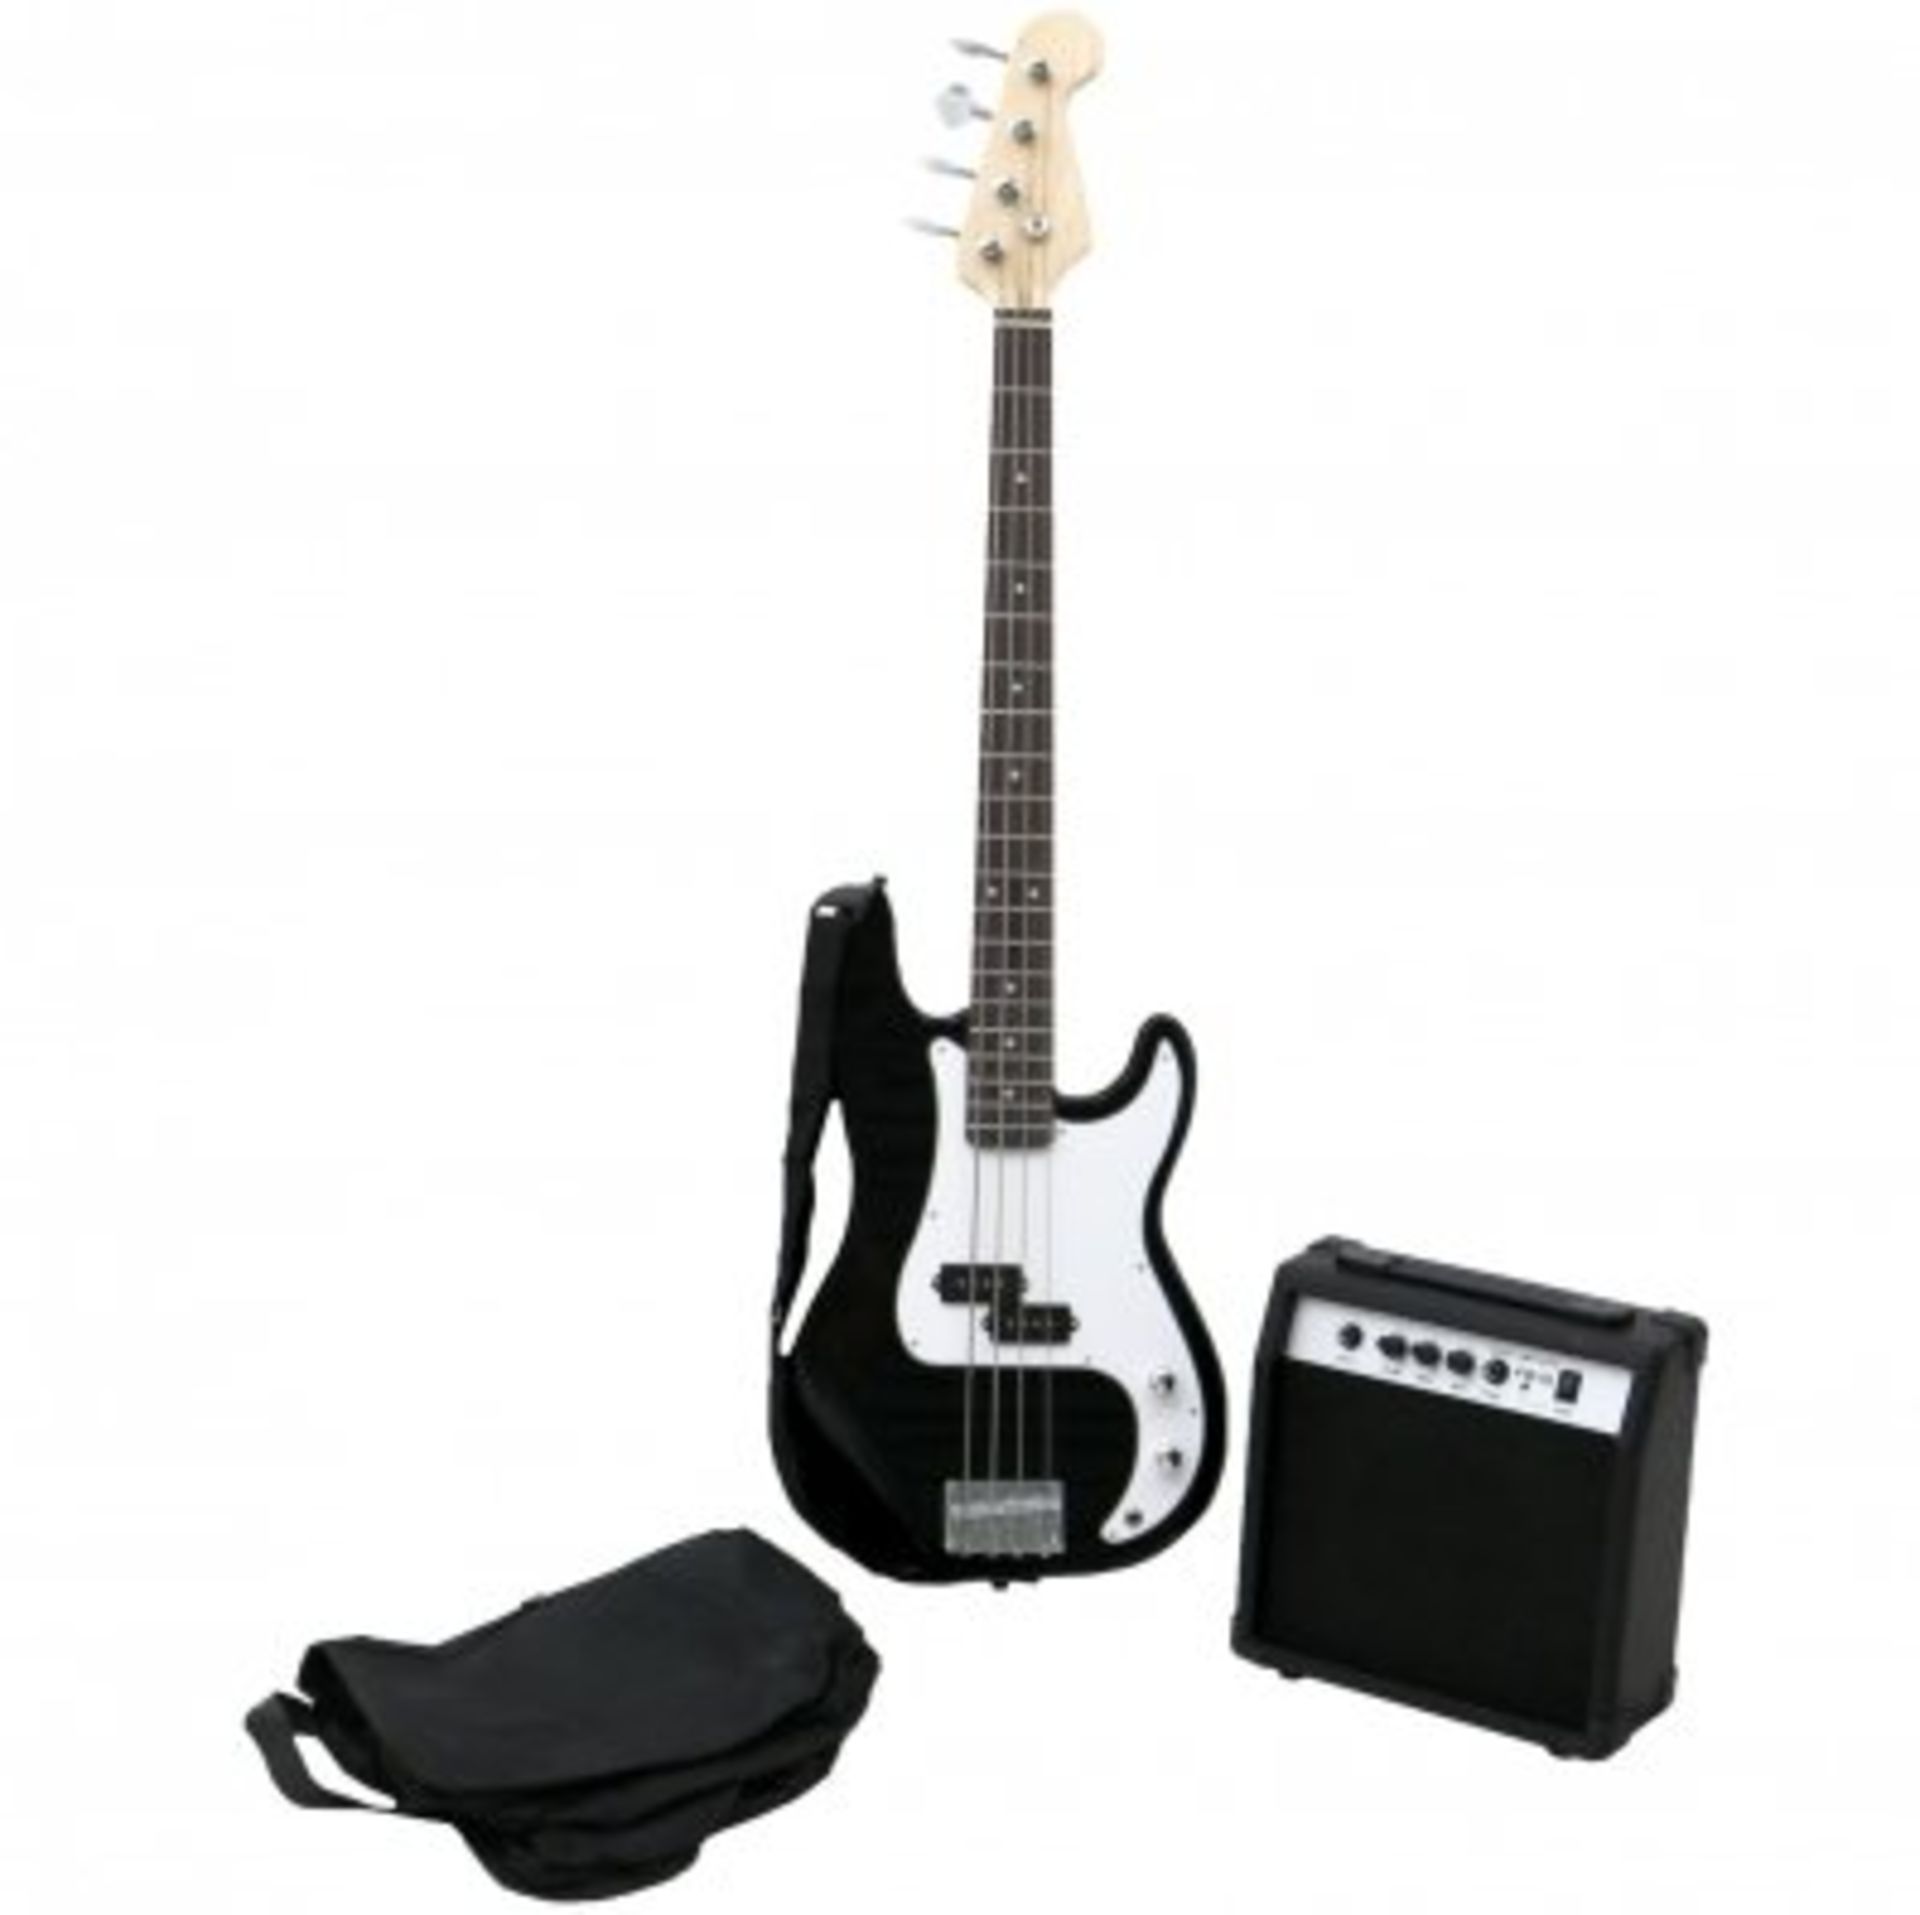 (KK103) PB Precision Style Black 4 String Electric Bass Guitar & 15W Amp The PB is a pr...